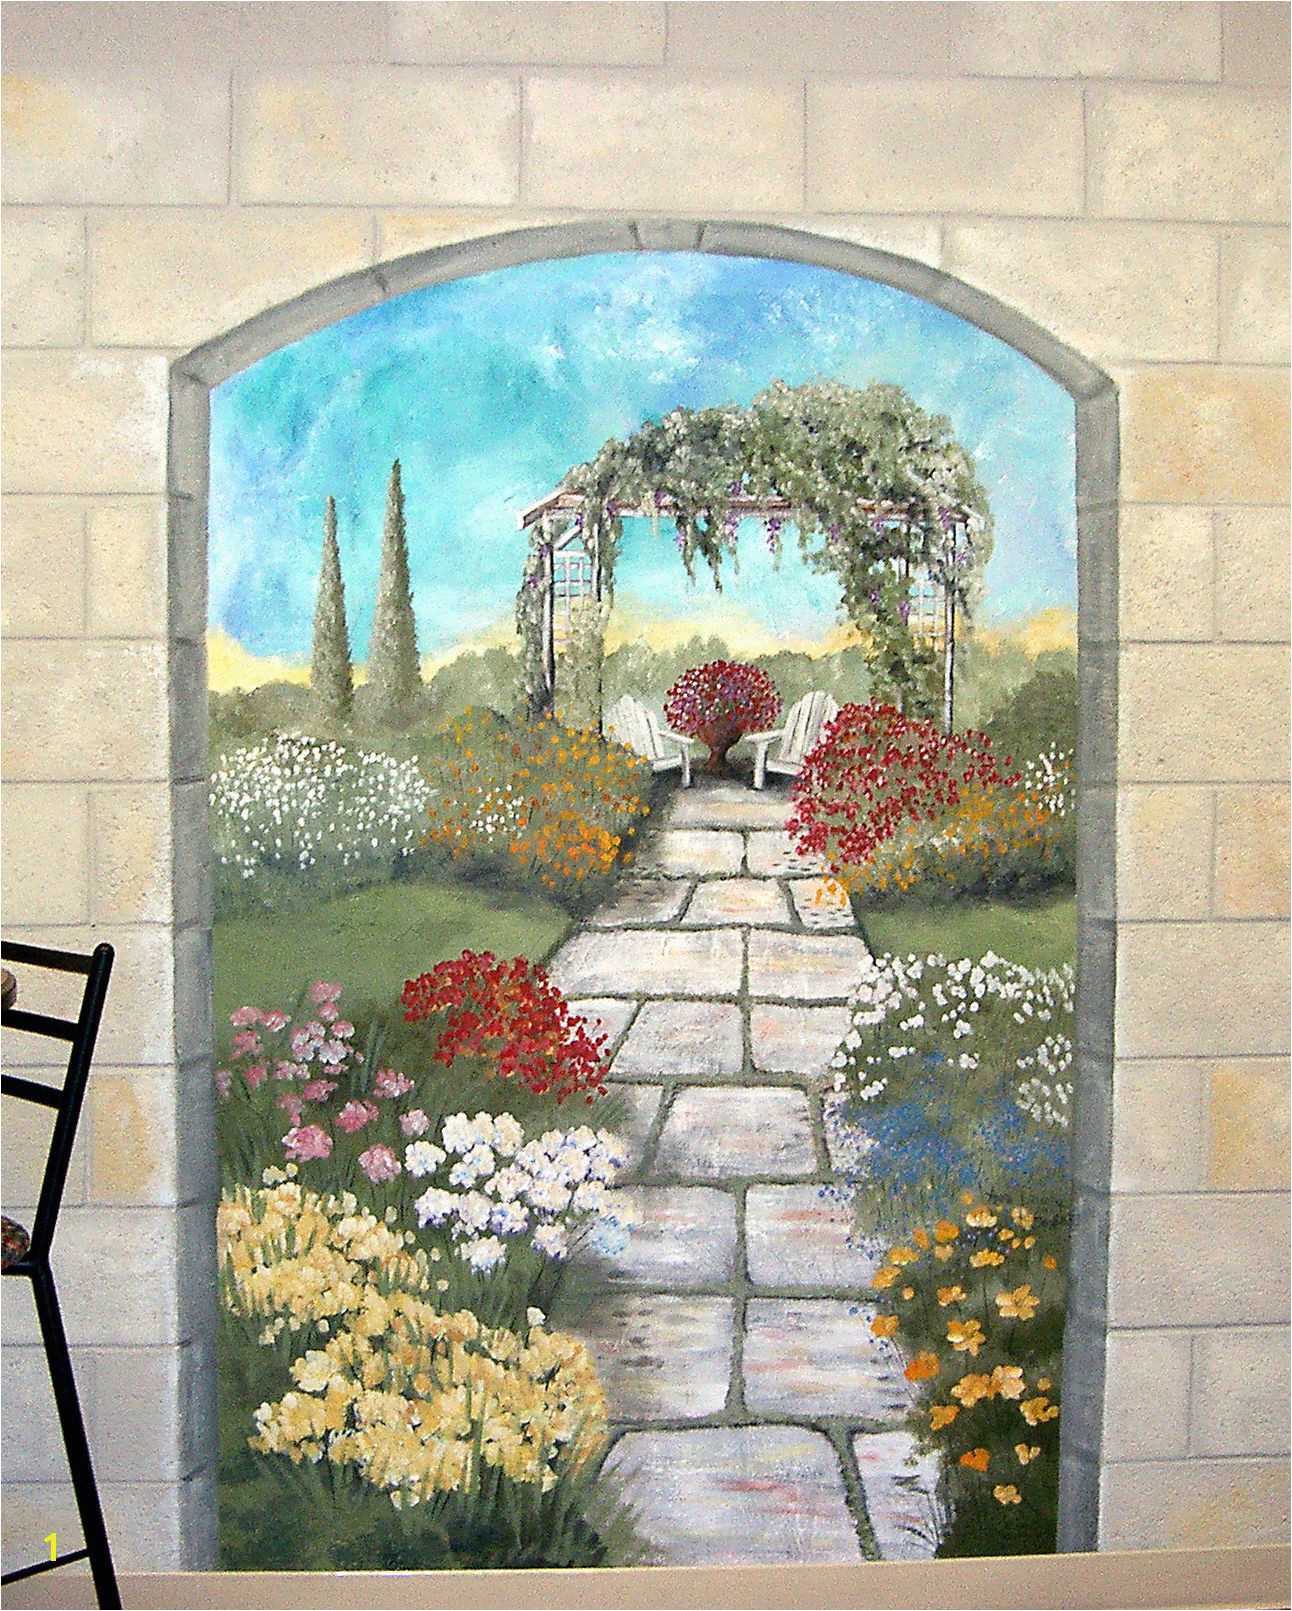 Painted Murals On Walls Garden Mural On A Cement Block Wall Colorful Flower Garden Mural